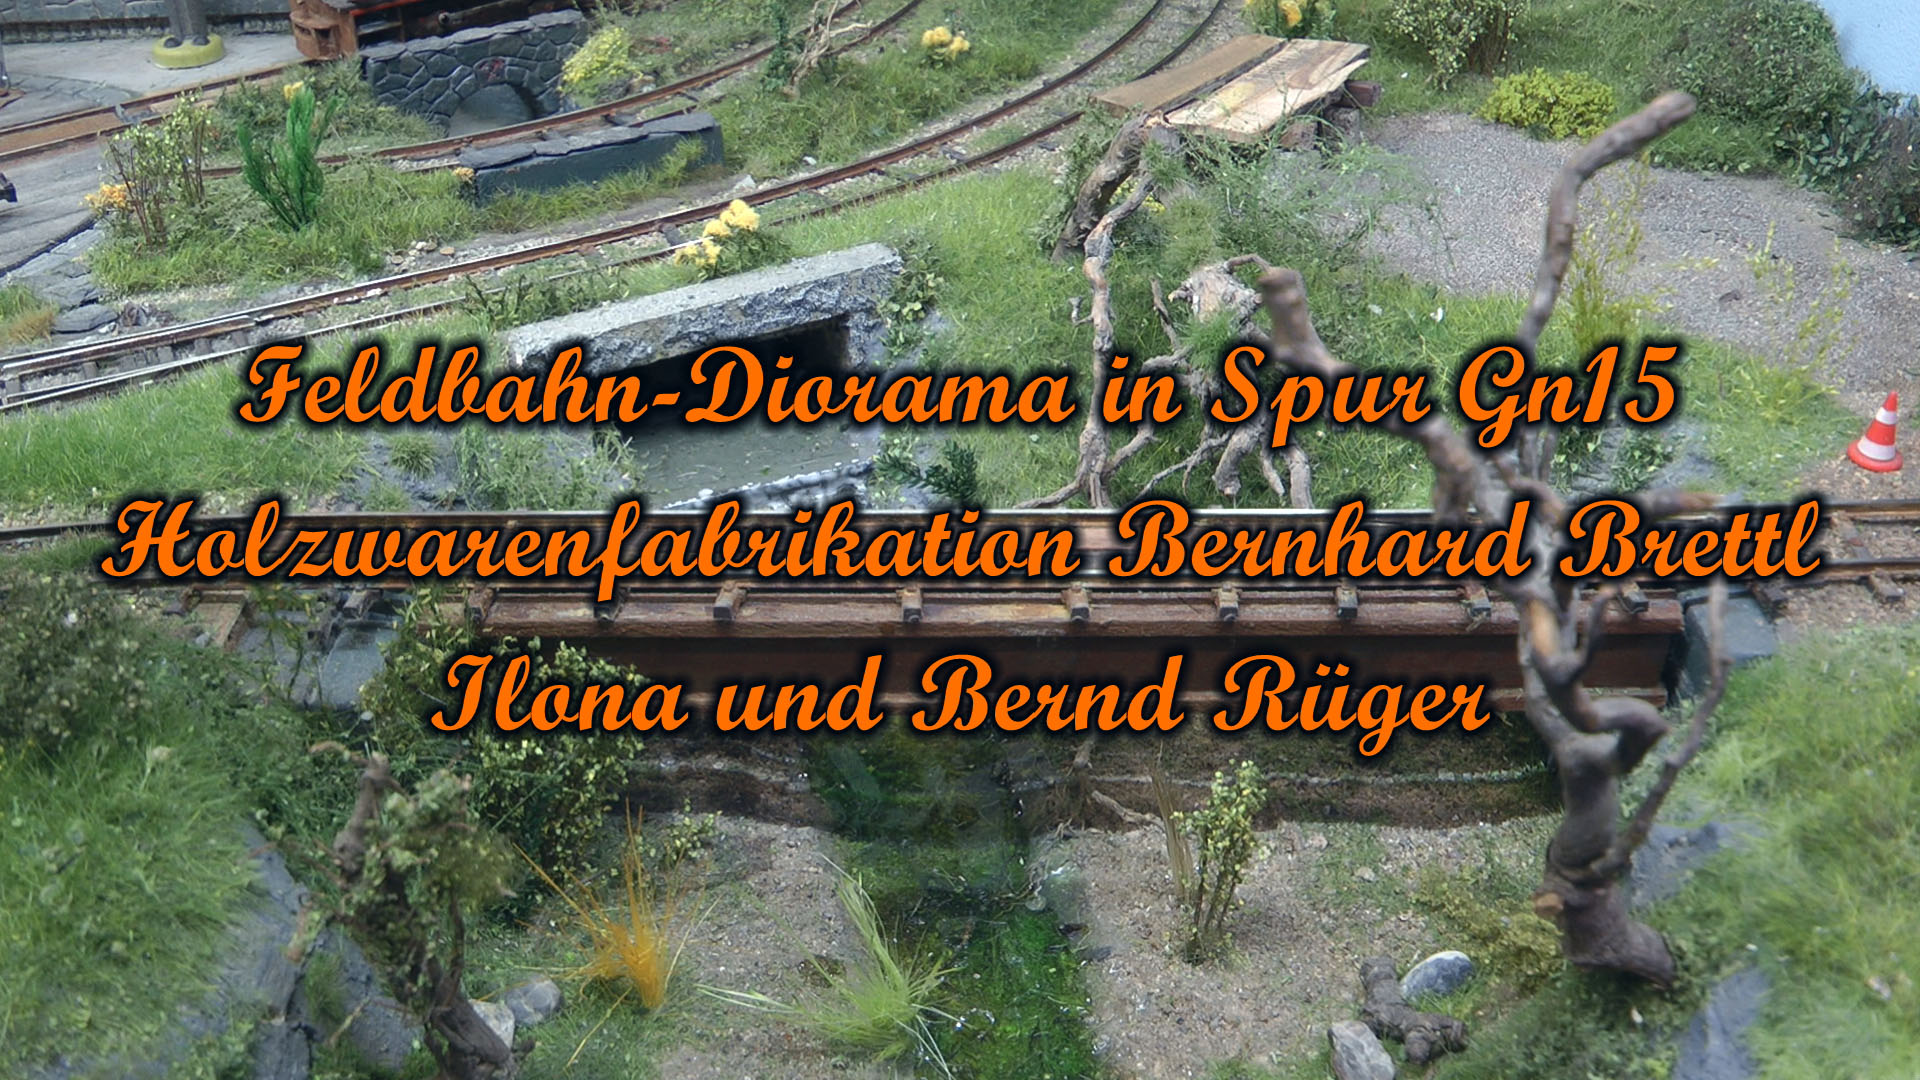 Feldbahn-Diorama: Holzwarenfabrikation Bernhard Brettl im Erzgebirge - Modellbahn in Spur Gn15